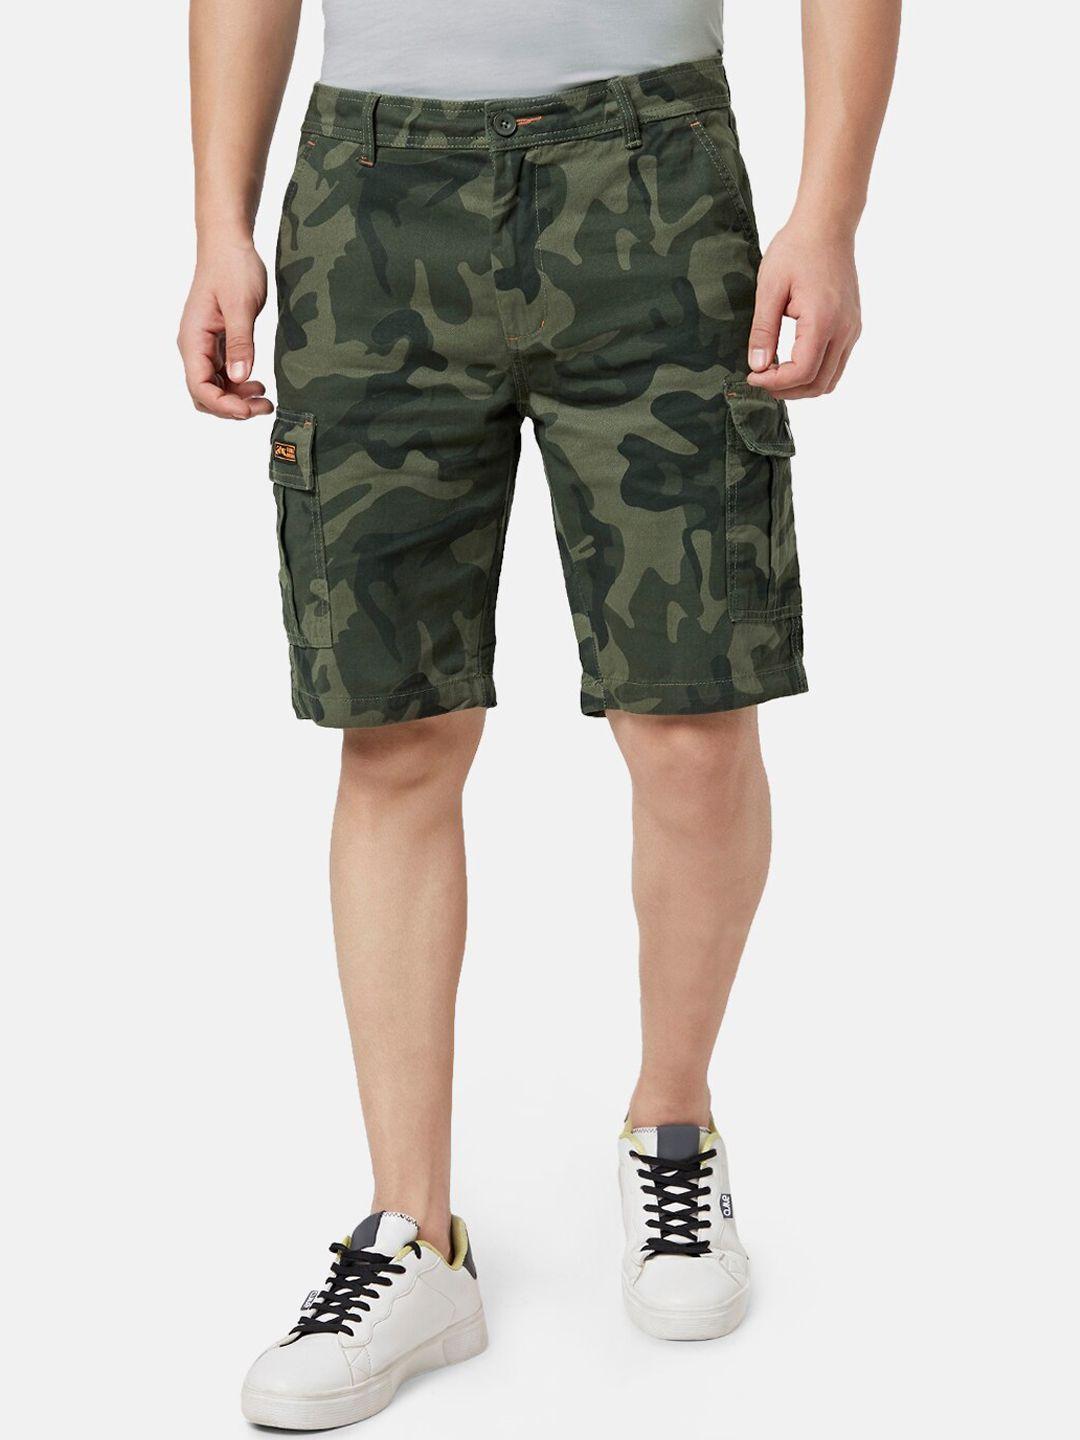 urban ranger by pantaloons men camouflage printed slim fit cargo shorts